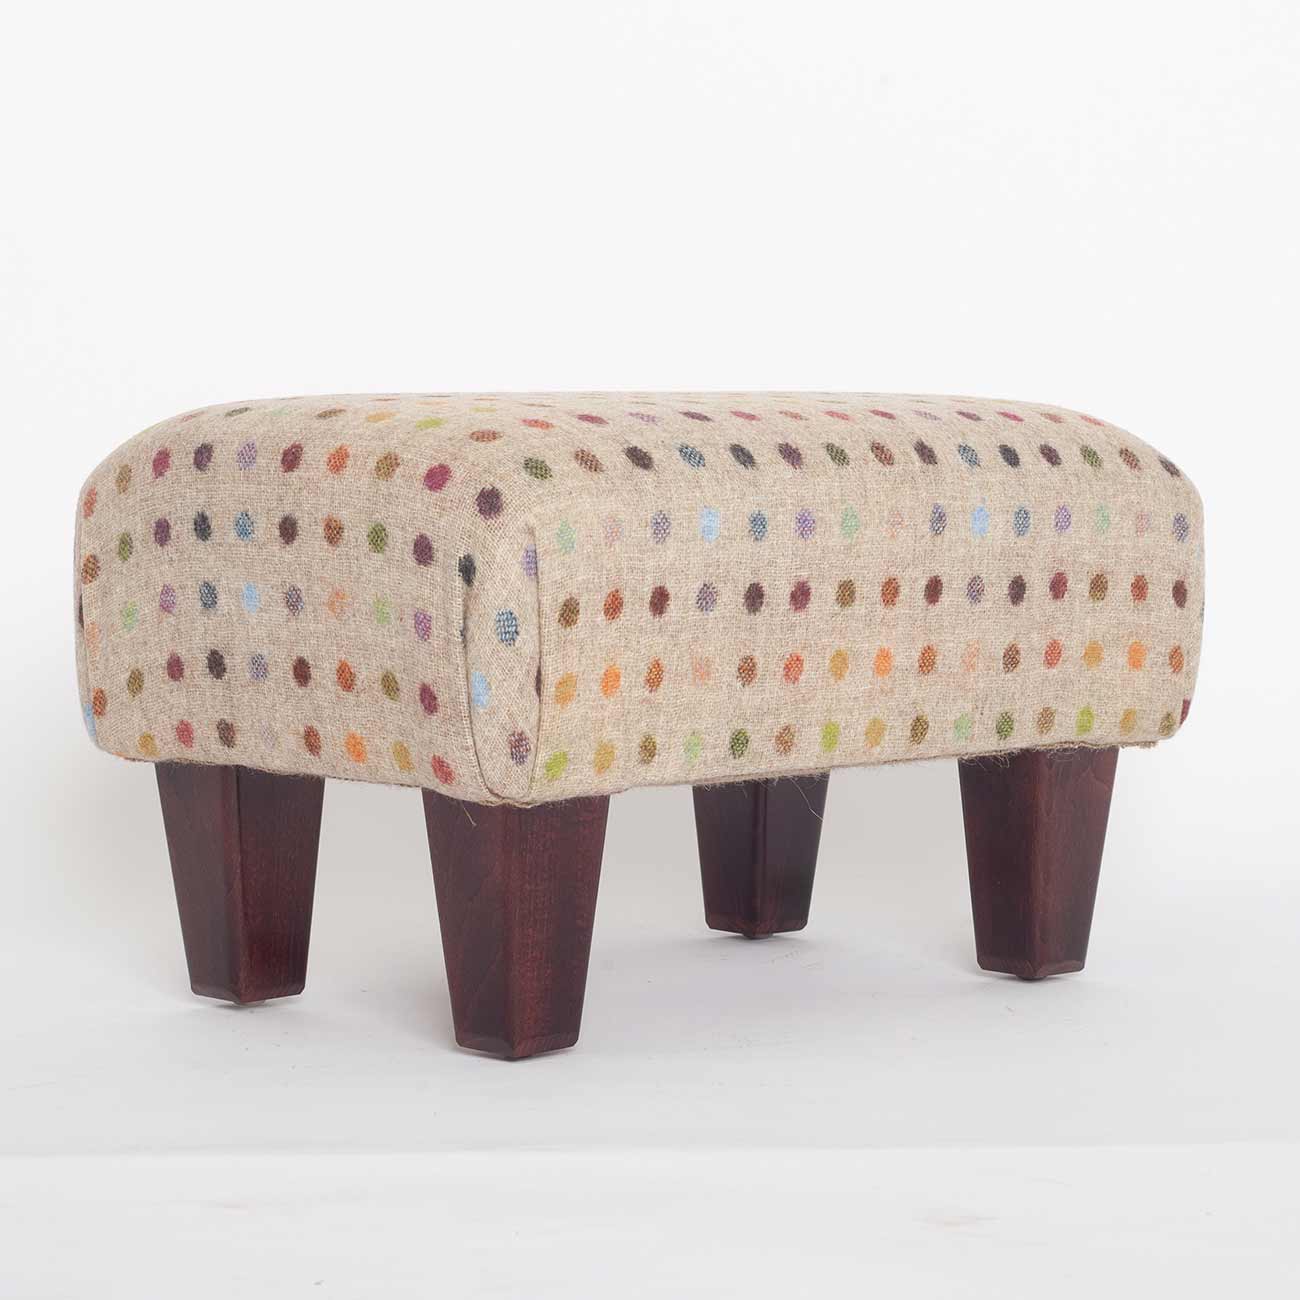 spotty-pattern-footstool8 fabric from JLP